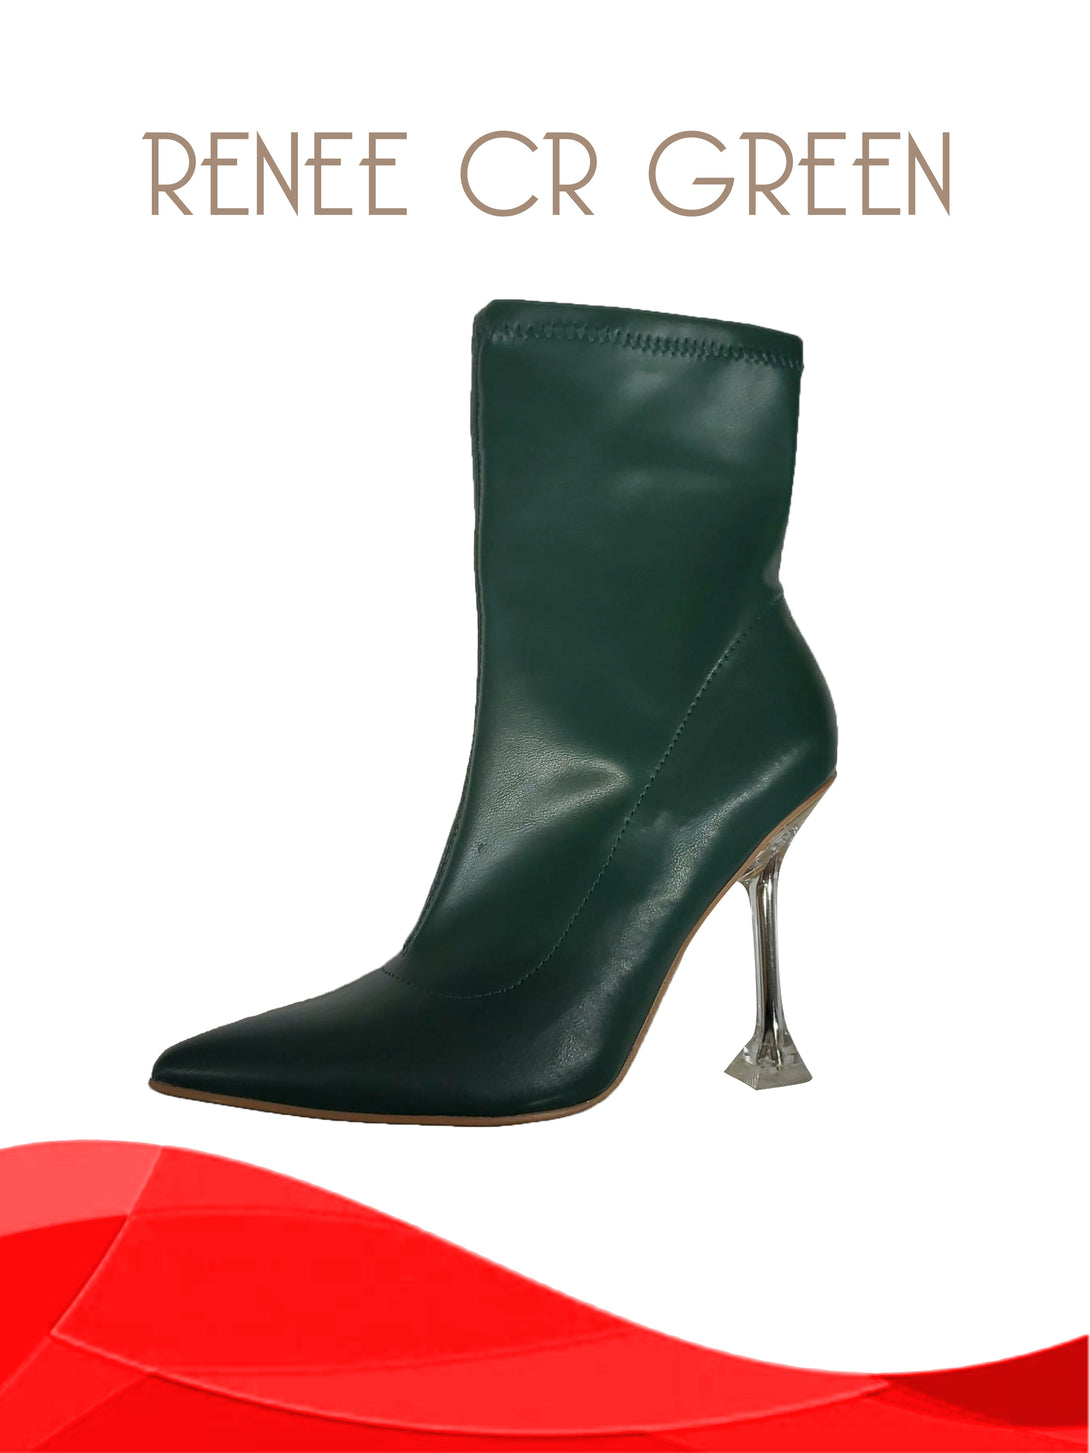 Renee CR Green